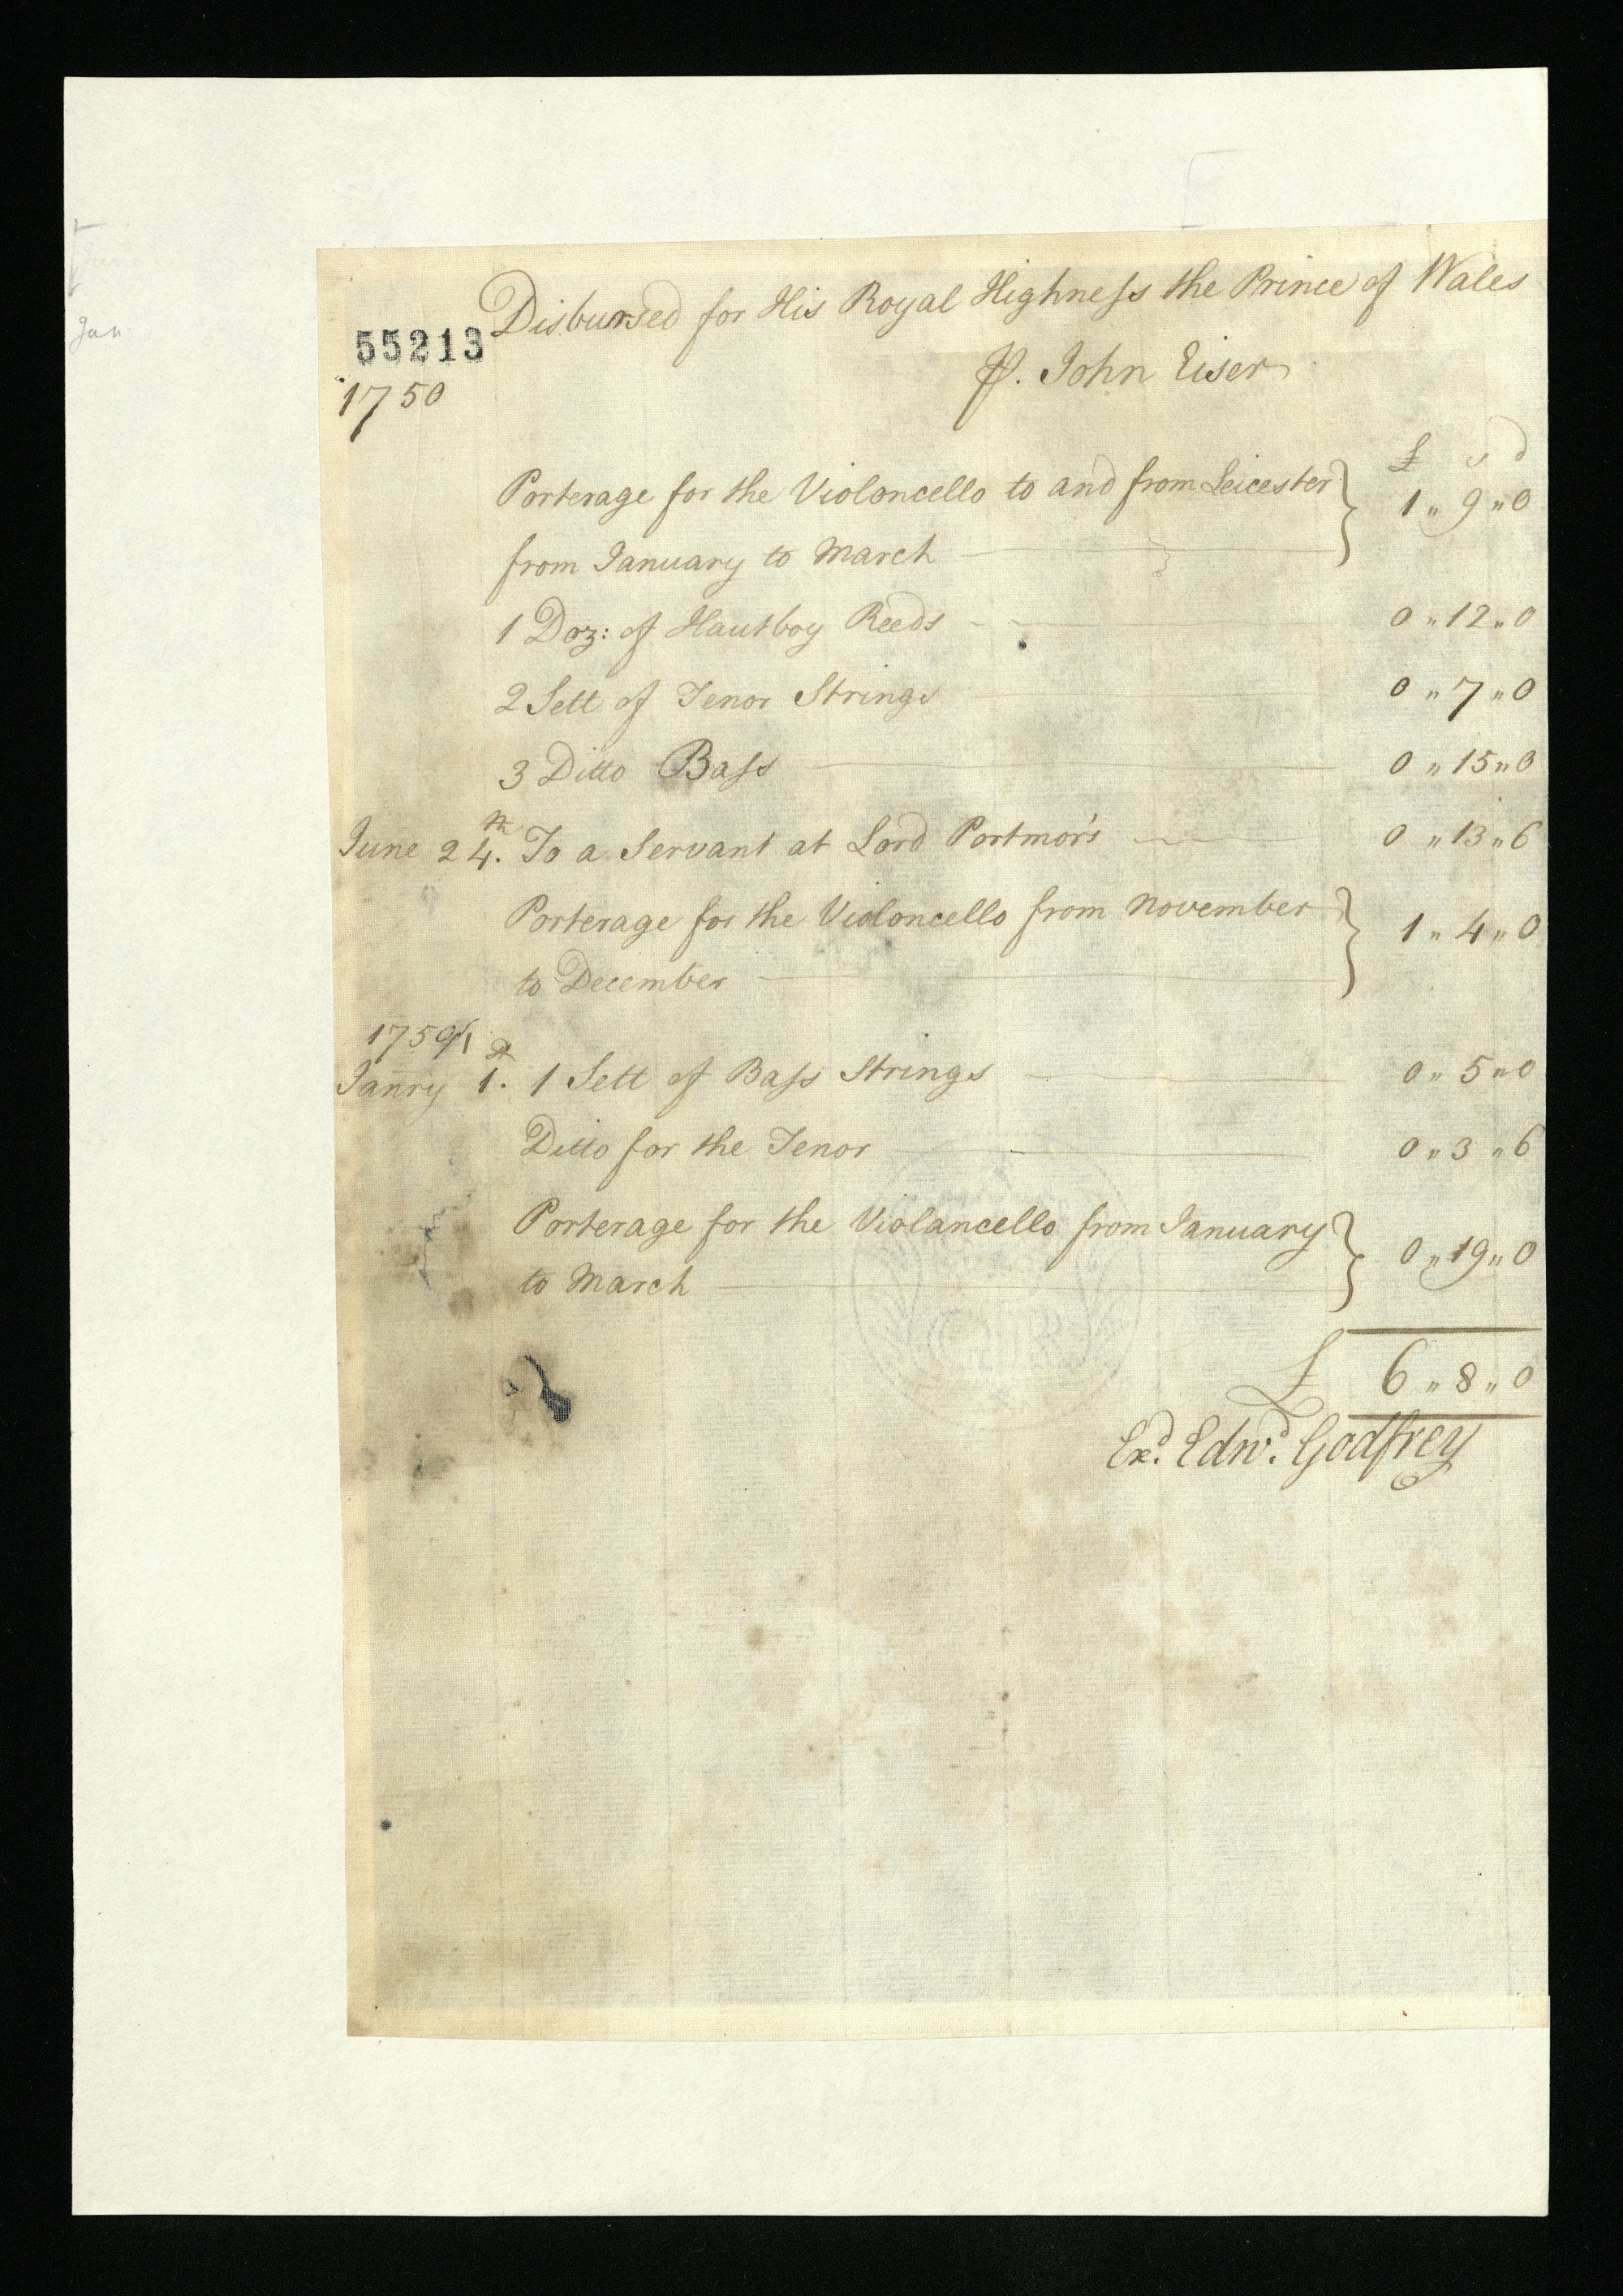 Royal Archives bill